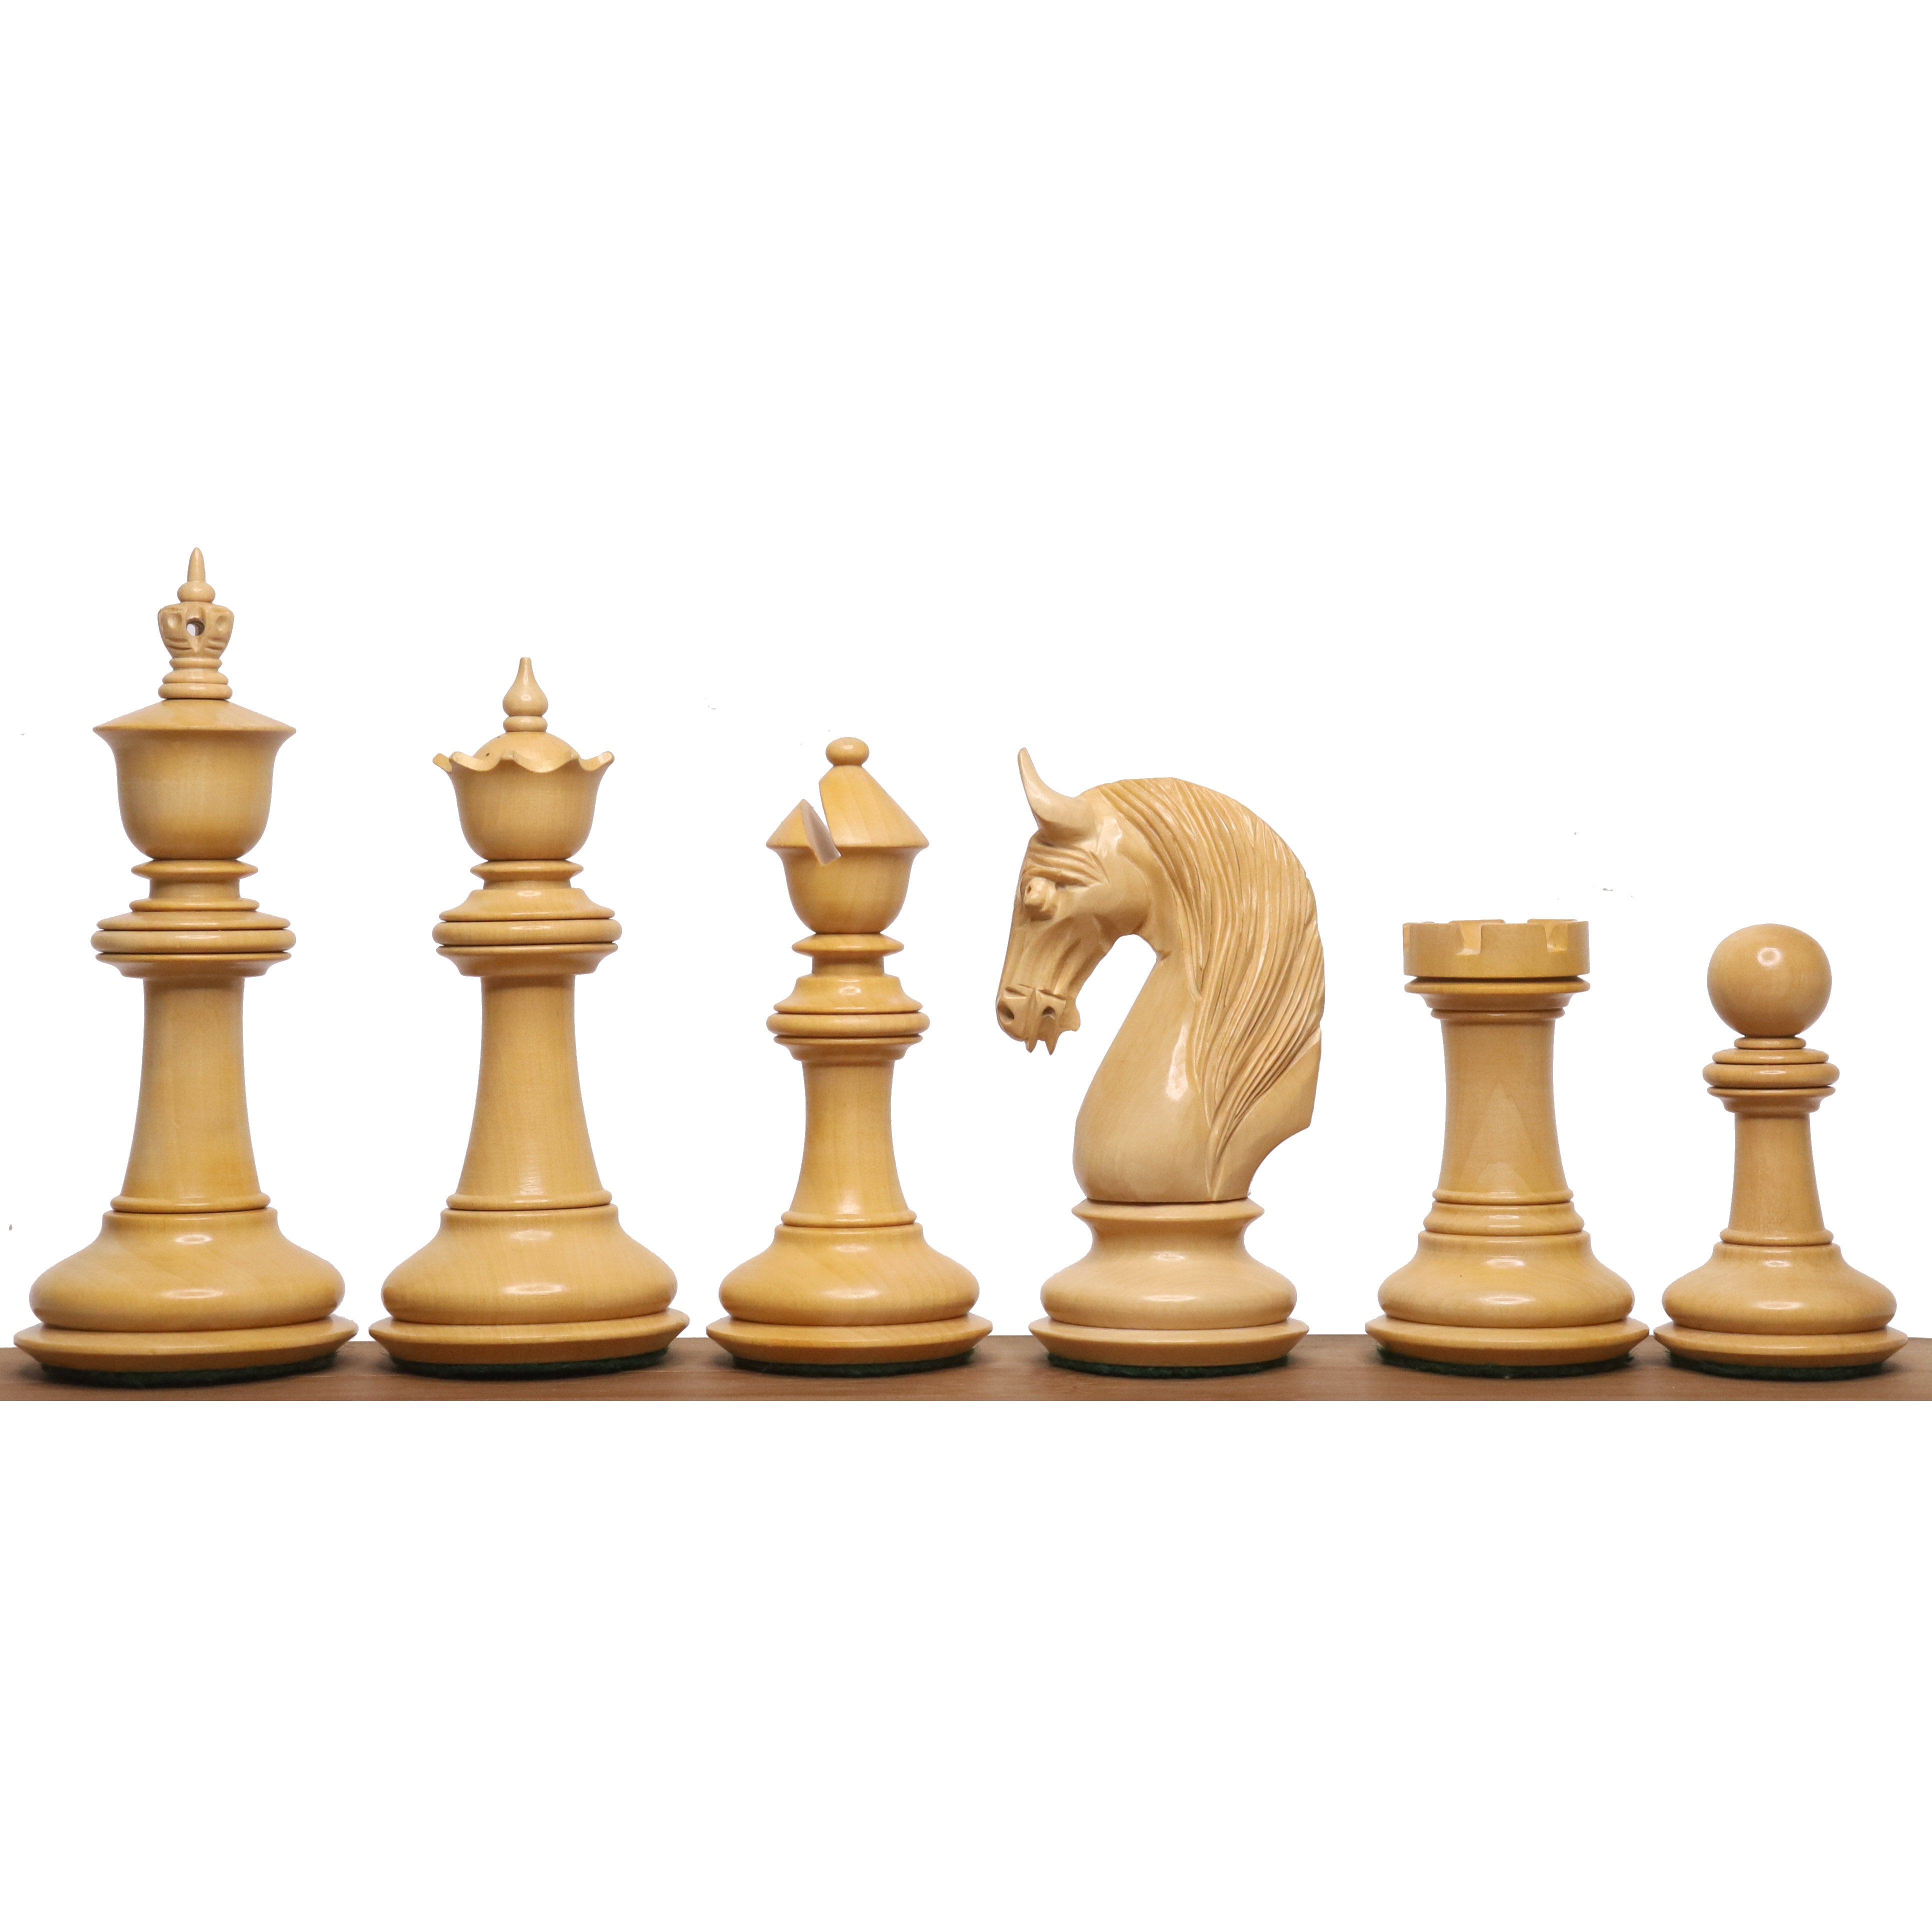 4.6" Bath Luxury Staunton Chess Set- Chess Pieces Only - Ebony Wood - Triple Weight